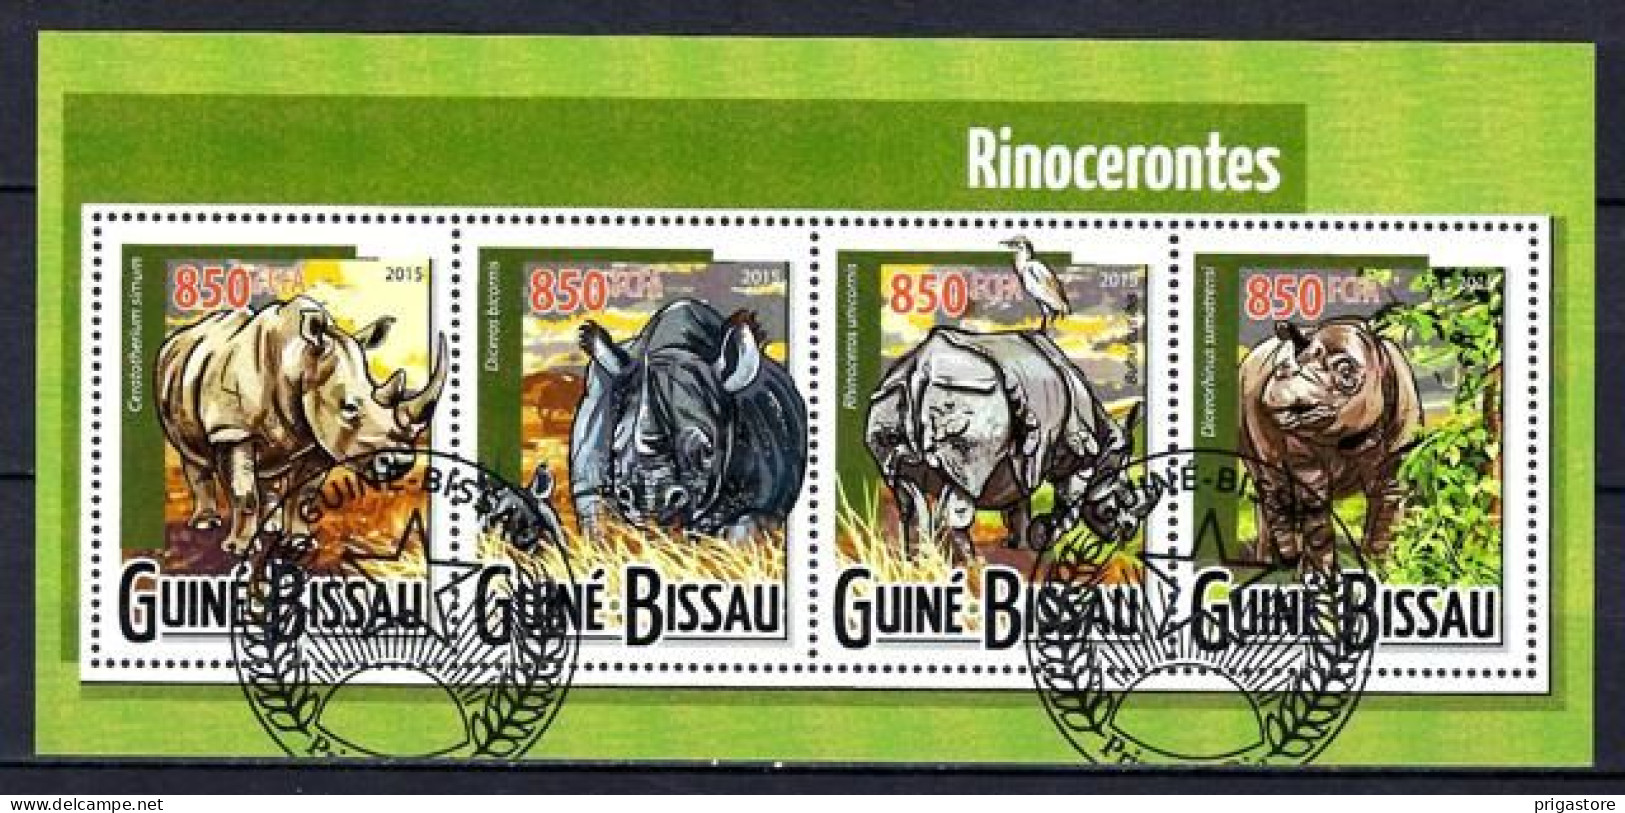 Animaux Rhinocéros Guinée Bissau 2015 (329) Yvert N° 6012 à 6015 Oblitérés Used - Rhinocéros